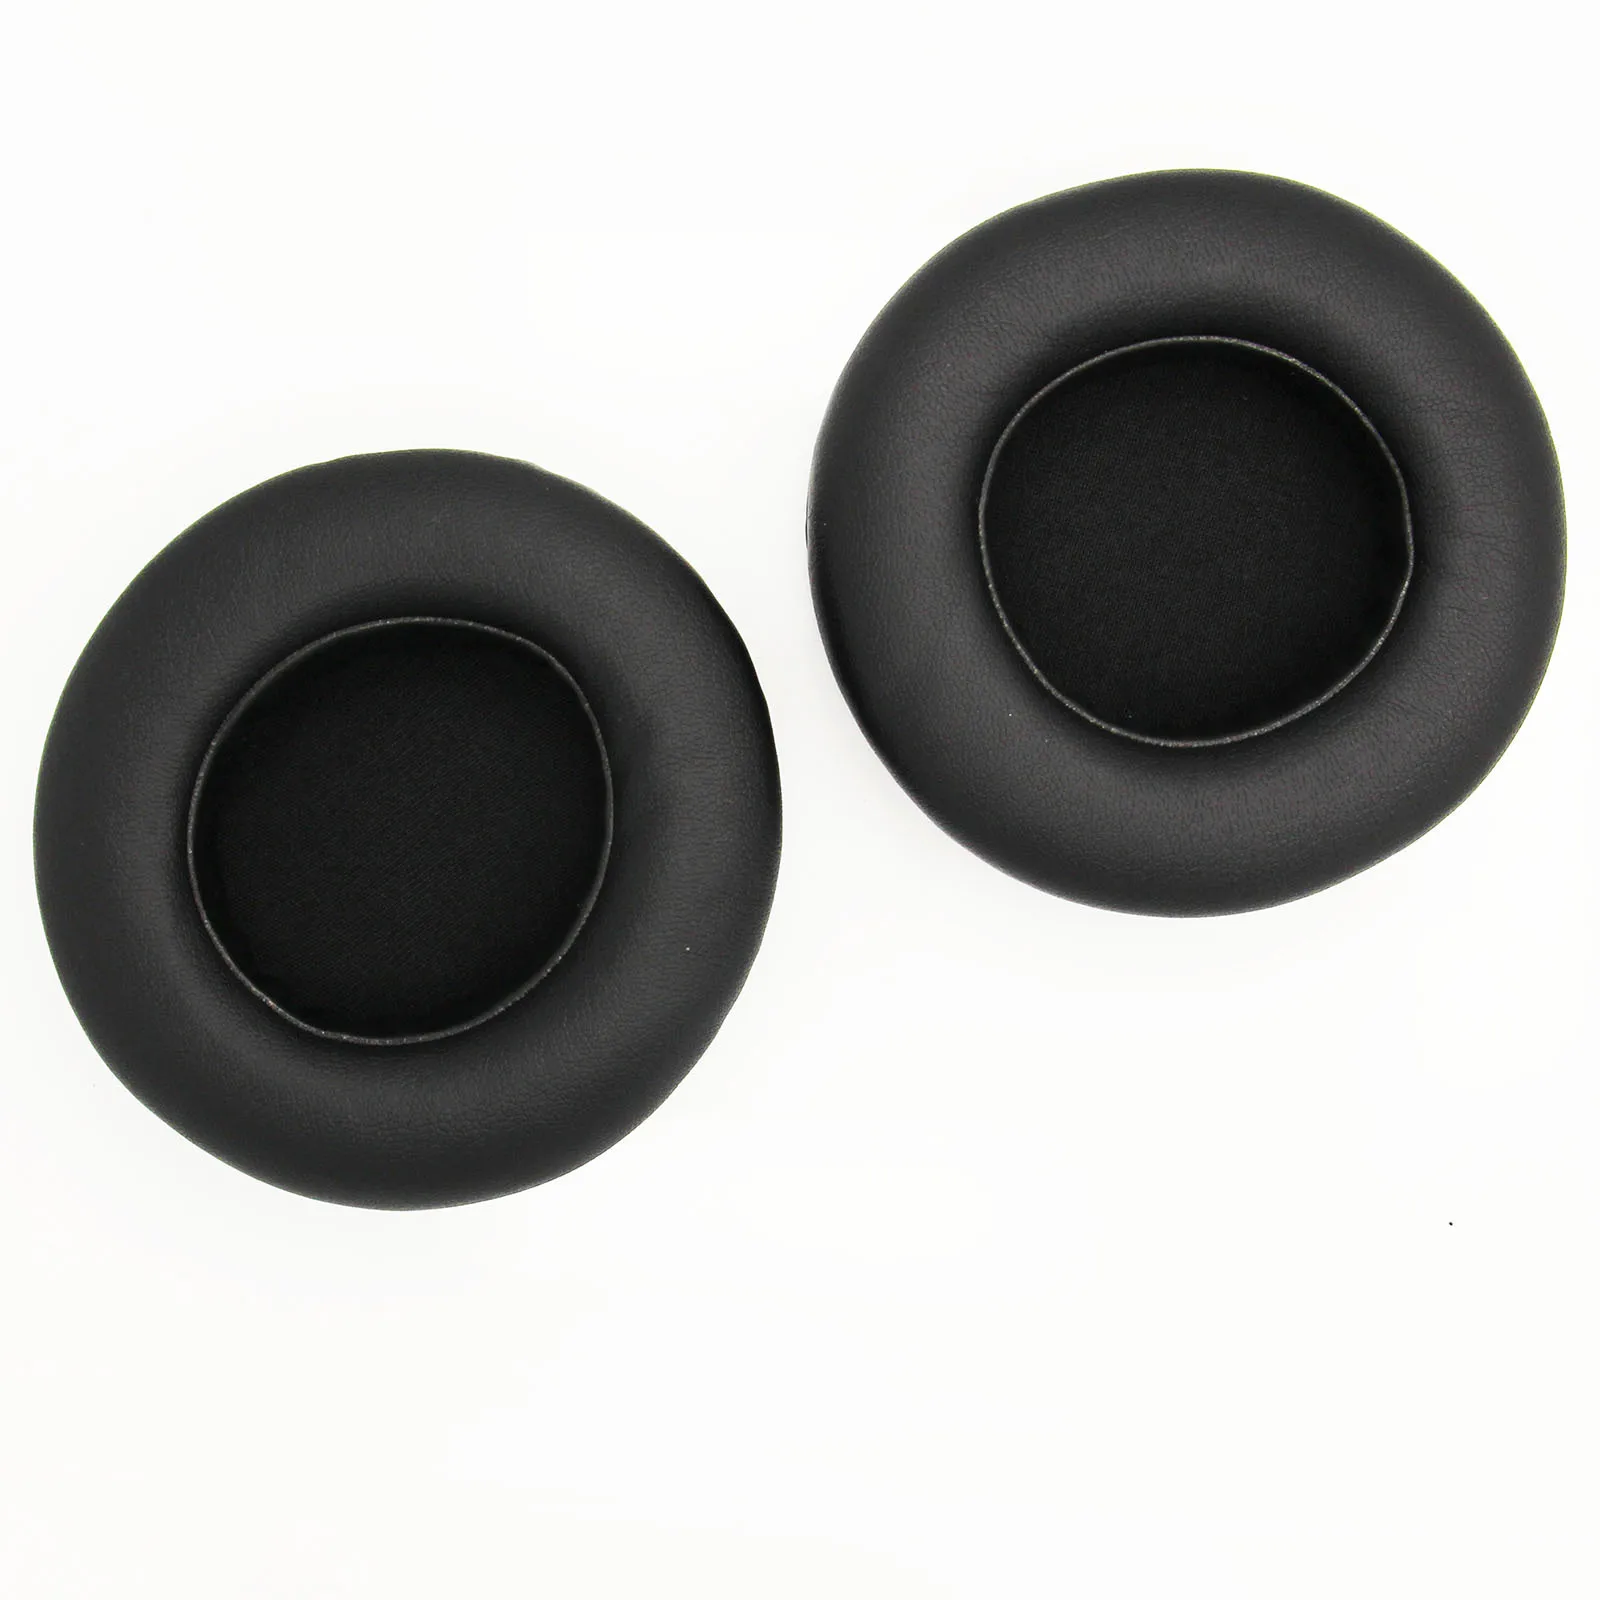 

Replacement Headphones Earpad Ear Pads Cushion Cushions for Razer Kraken 7.1 Pro Gaming Headphones Headsets